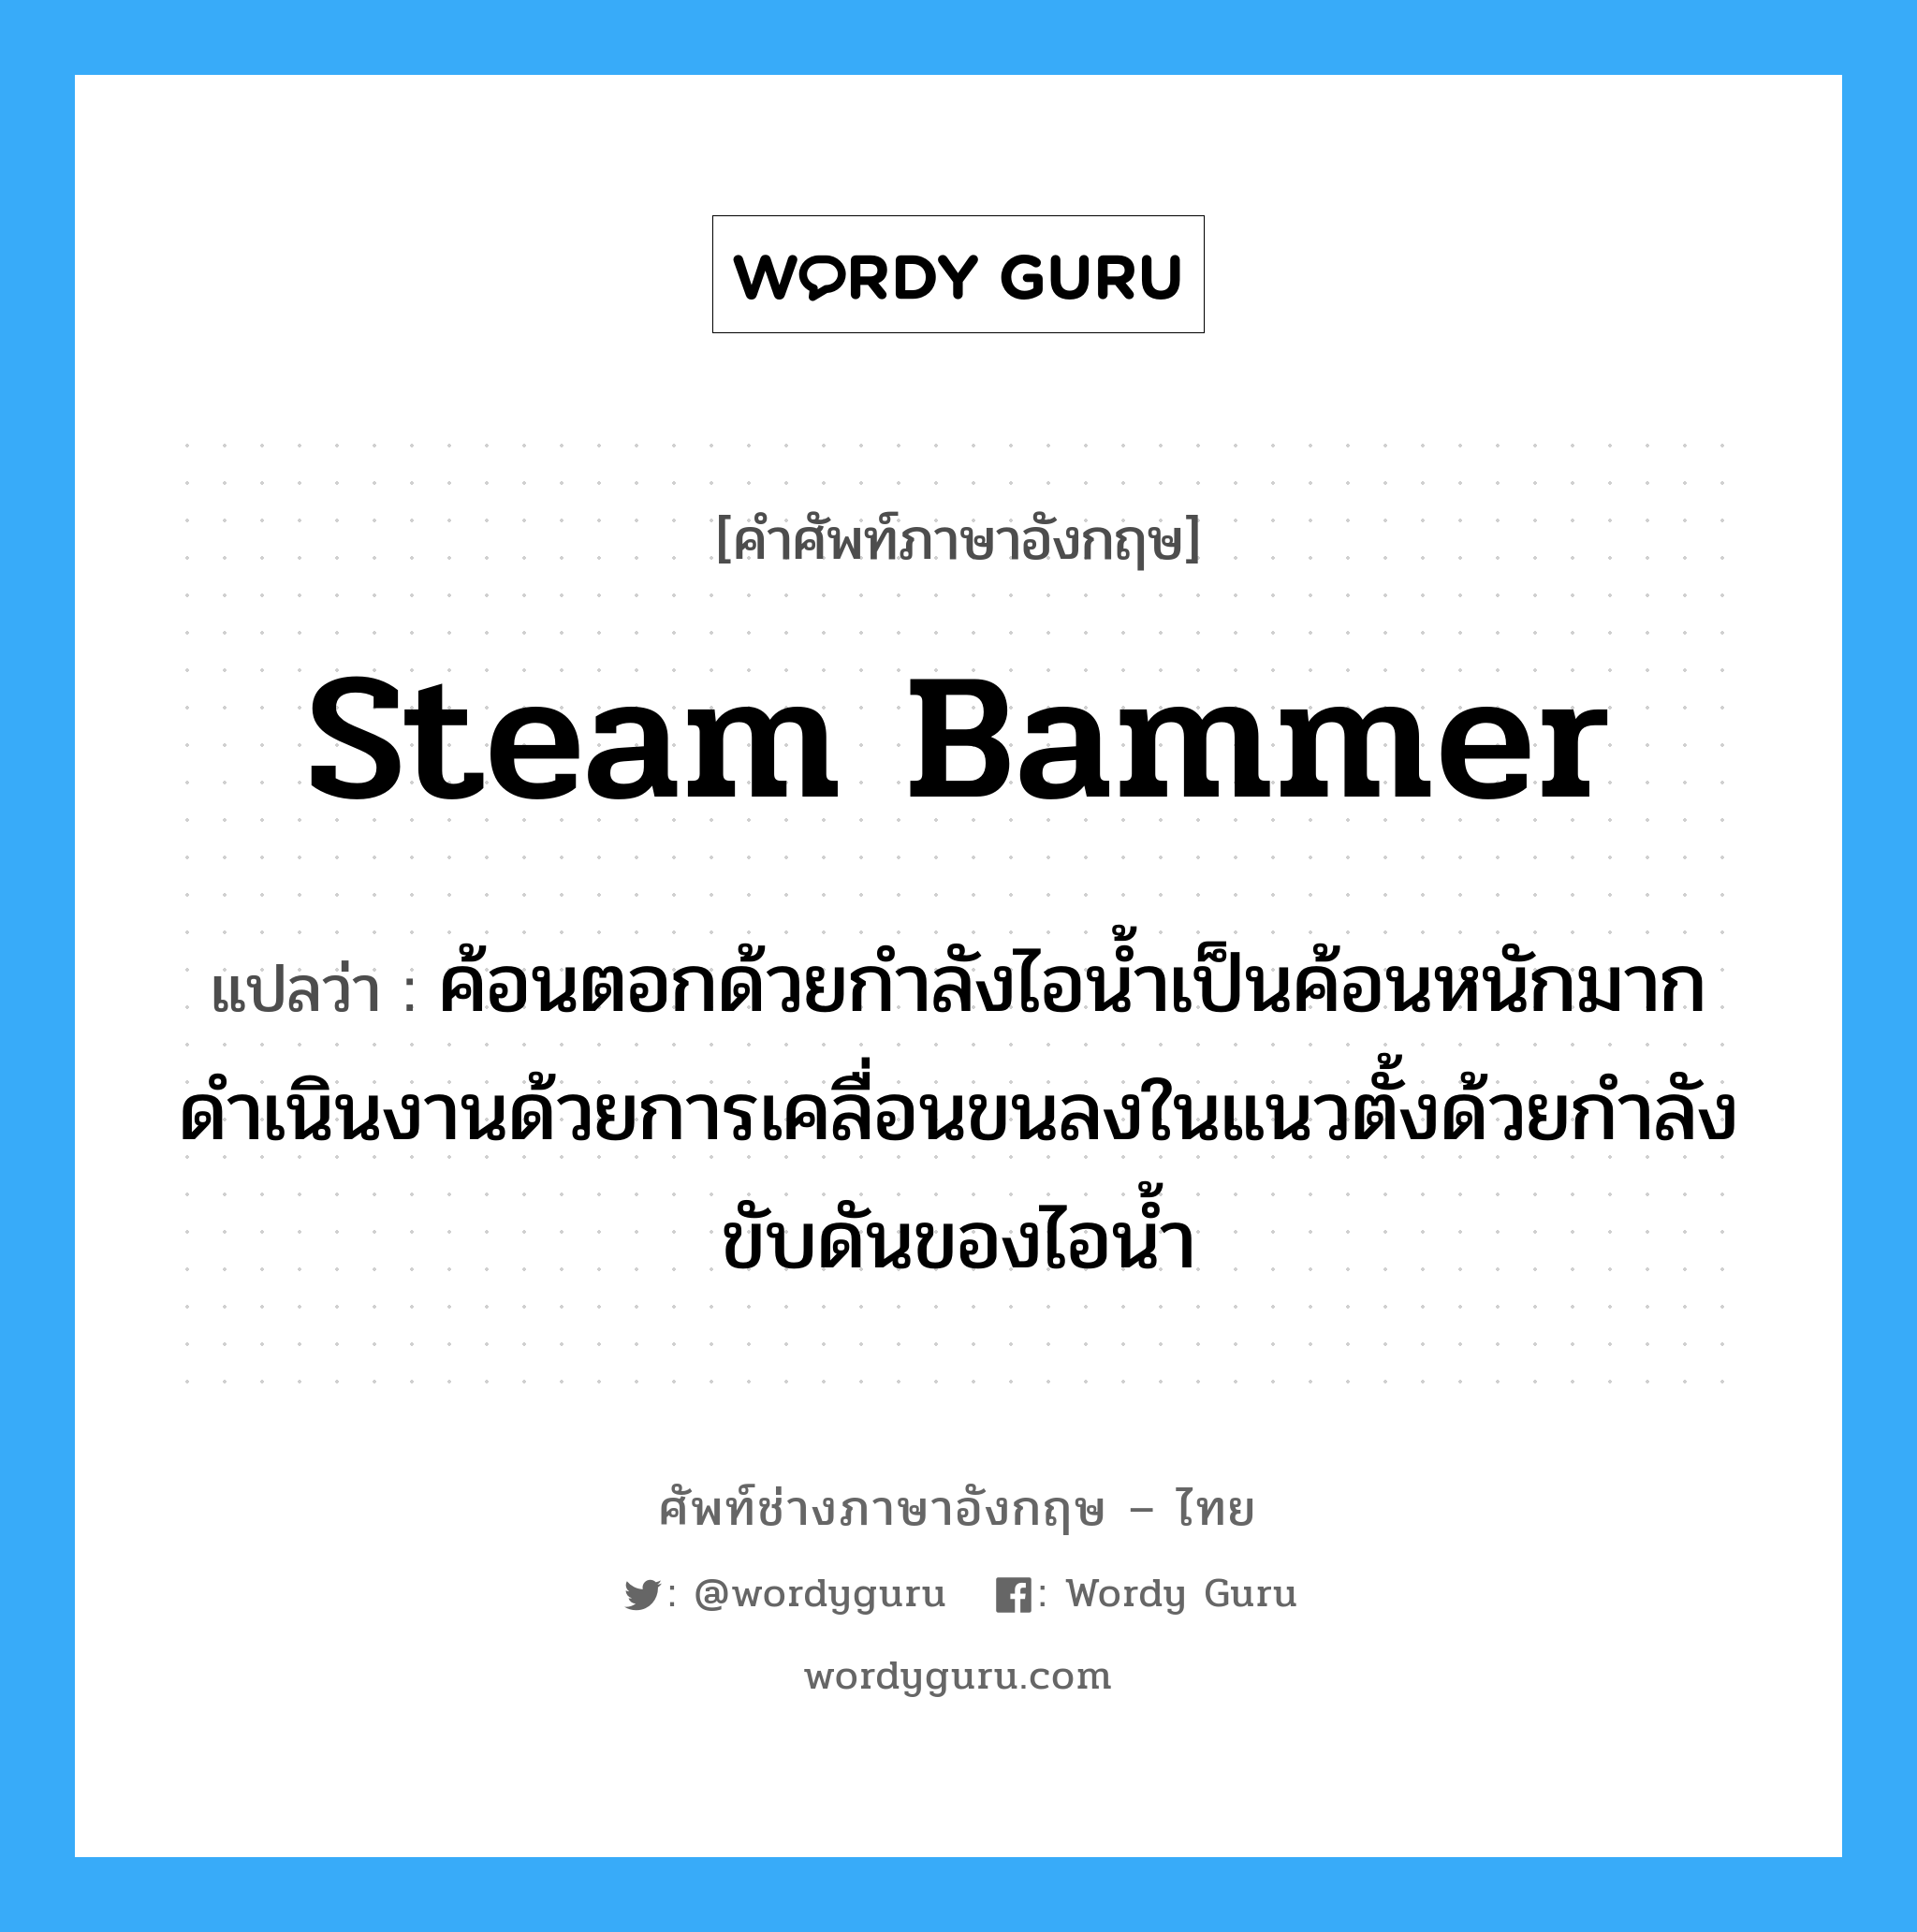 steam bammer แปลว่า?, คำศัพท์ช่างภาษาอังกฤษ - ไทย steam bammer คำศัพท์ภาษาอังกฤษ steam bammer แปลว่า ค้อนตอกด้วยกำลังไอน้ำเป็นค้อนหนักมาก ดำเนินงานด้วยการเคลื่อนขนลงในแนวตั้งด้วยกำลังขับดันของไอน้ำ